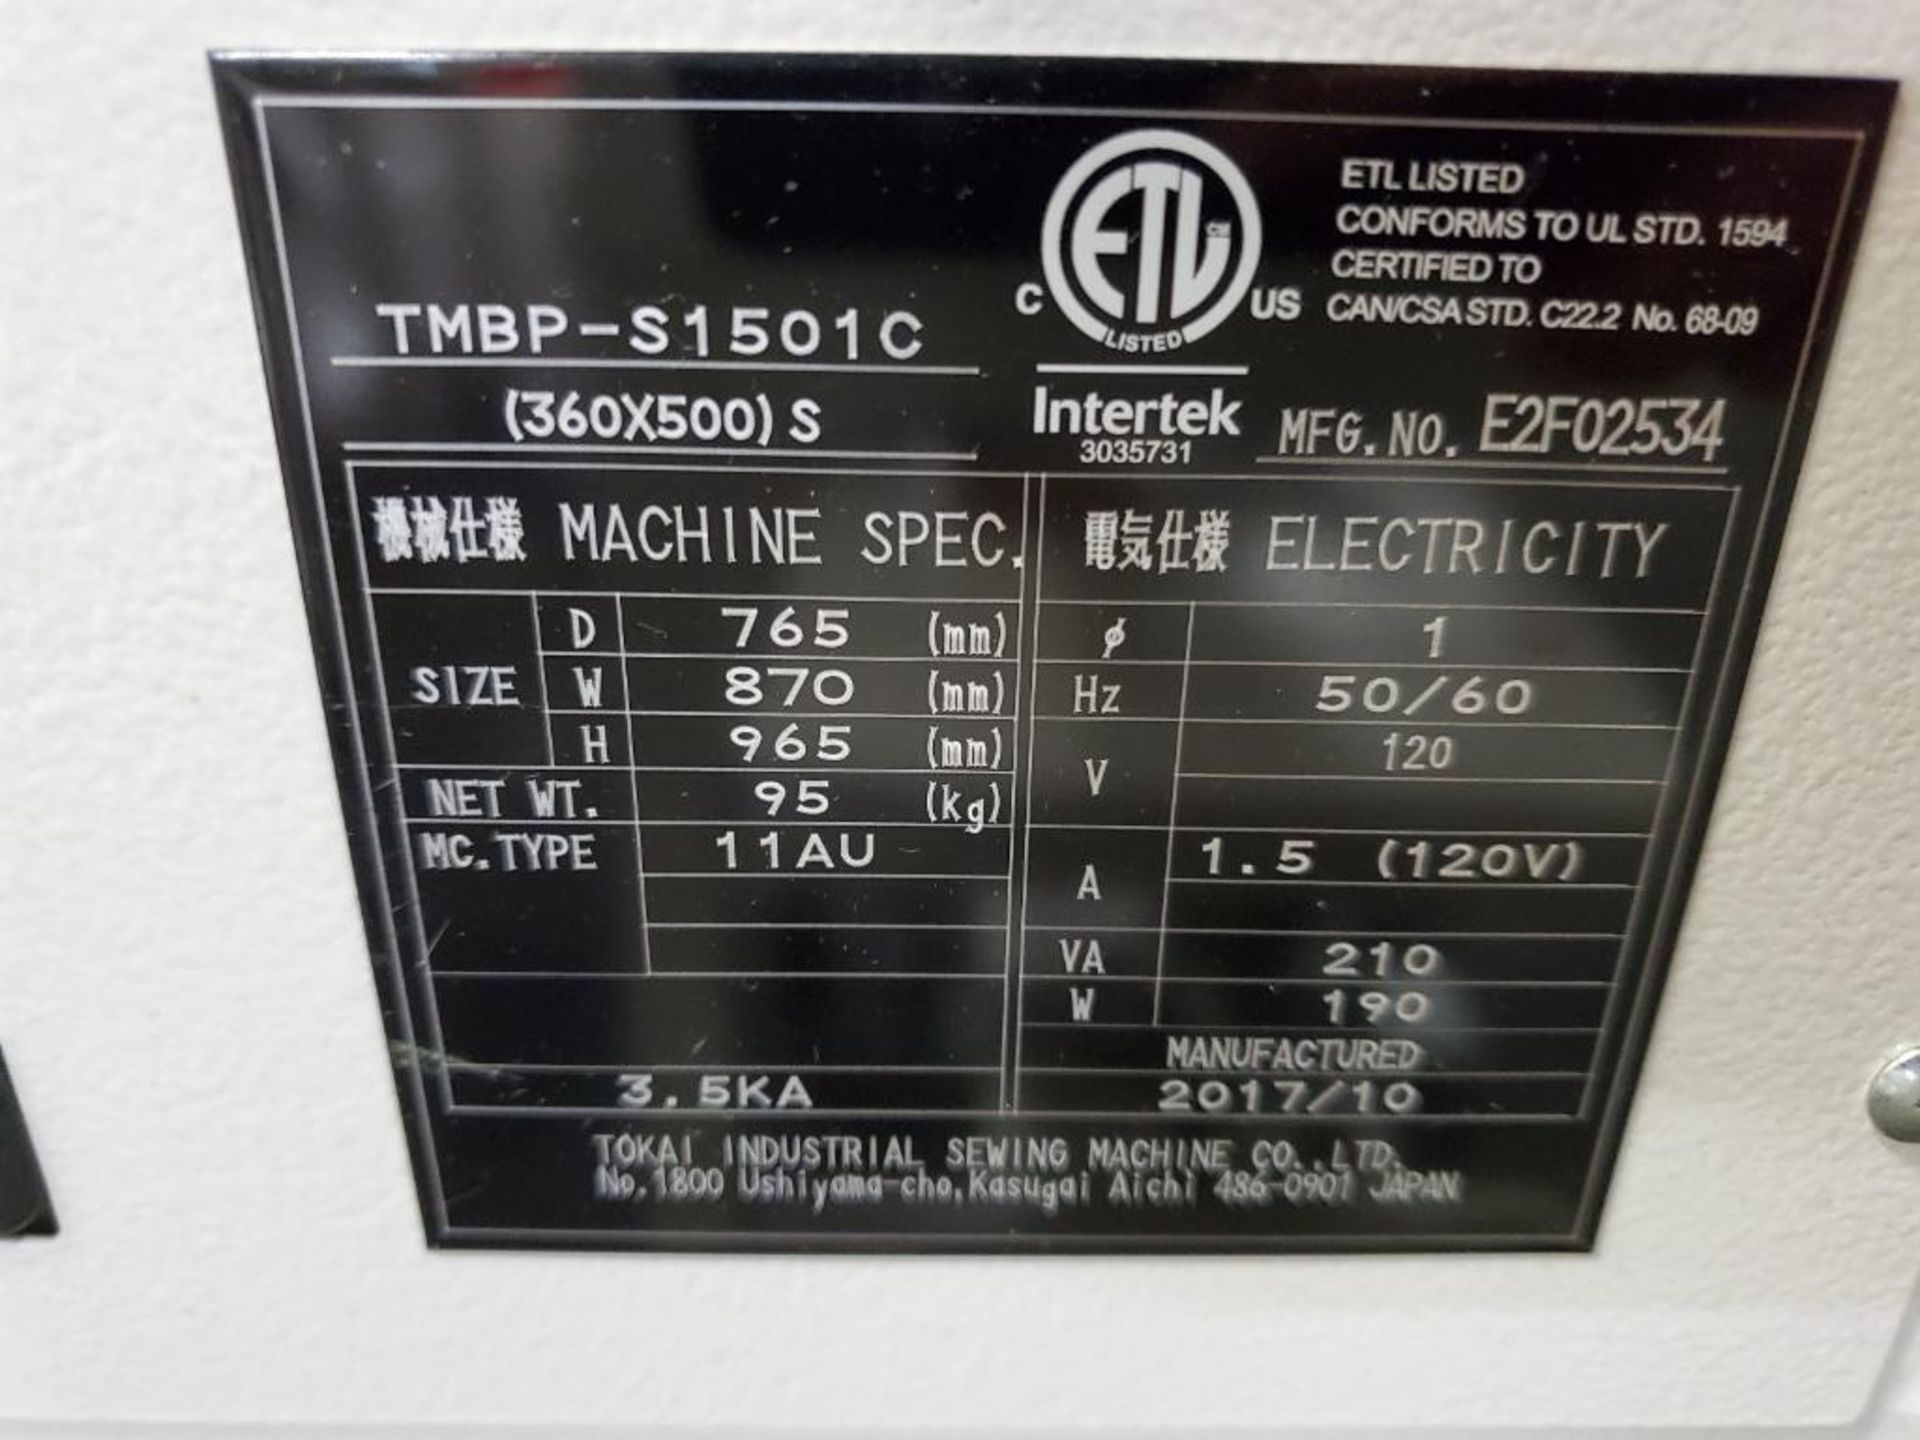 2017 TOKIA TAJIMA ELECTRONIC AUTOMATIC SEWING EMBROIDERY MACHINE, MODEL TMBP-S1501C, 15-THREAD SPOOL - Image 8 of 8